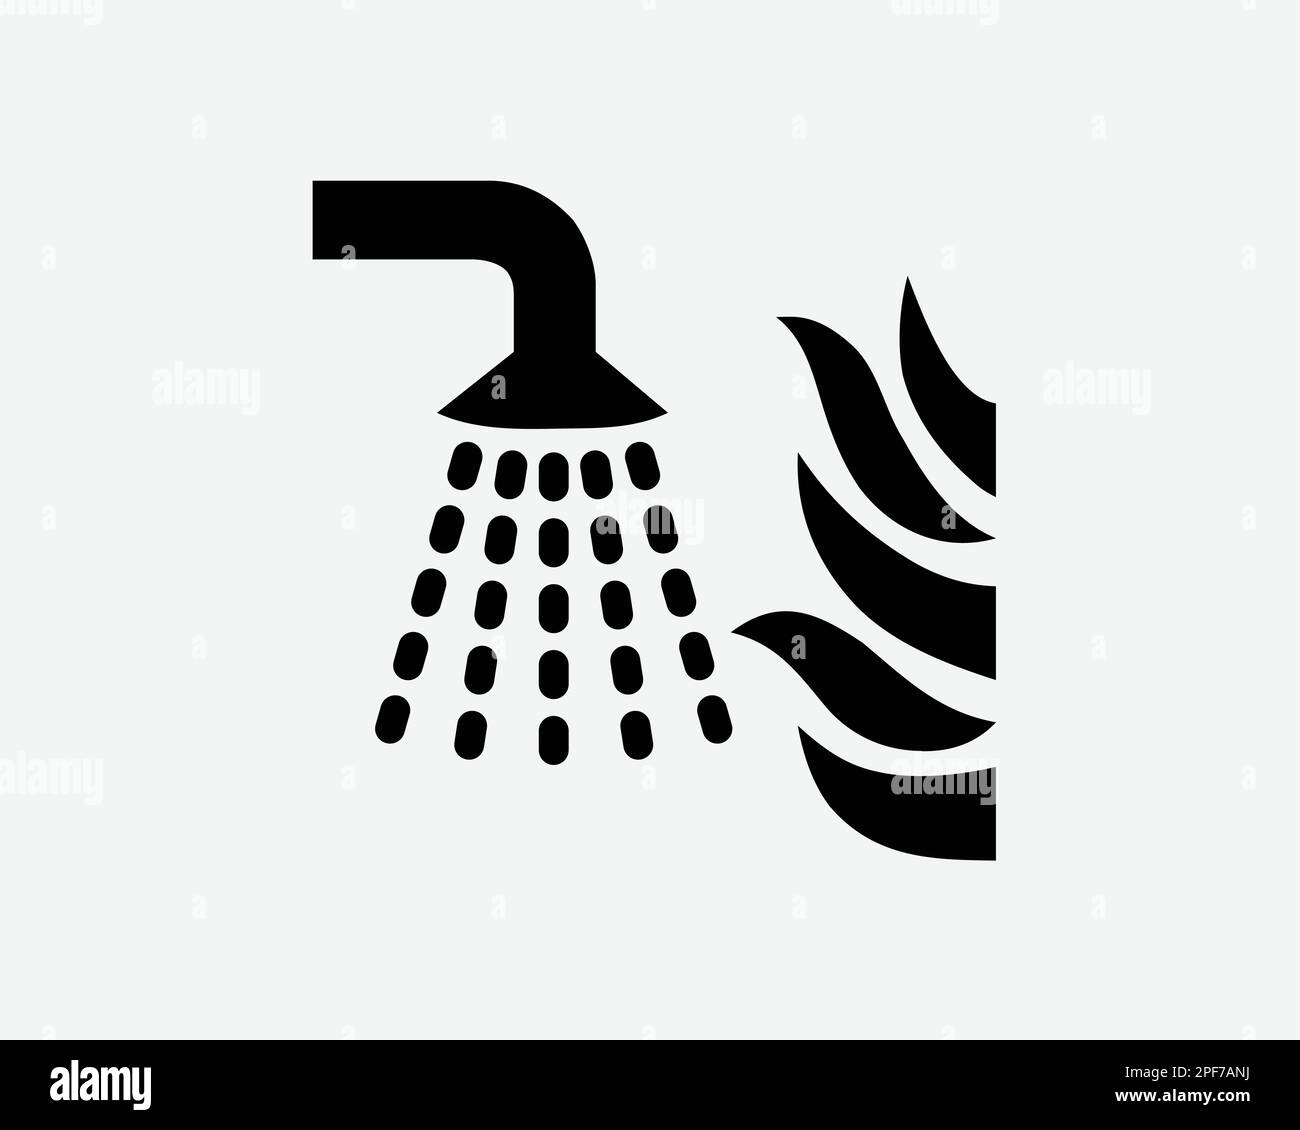 Fire Sprinkler Flame Spray Water Sprinkle Suppression System Black White Silhouette Sign Symbol Icon Clipart Graphic Artwork Pictogram Illustration Ve Stock Vector